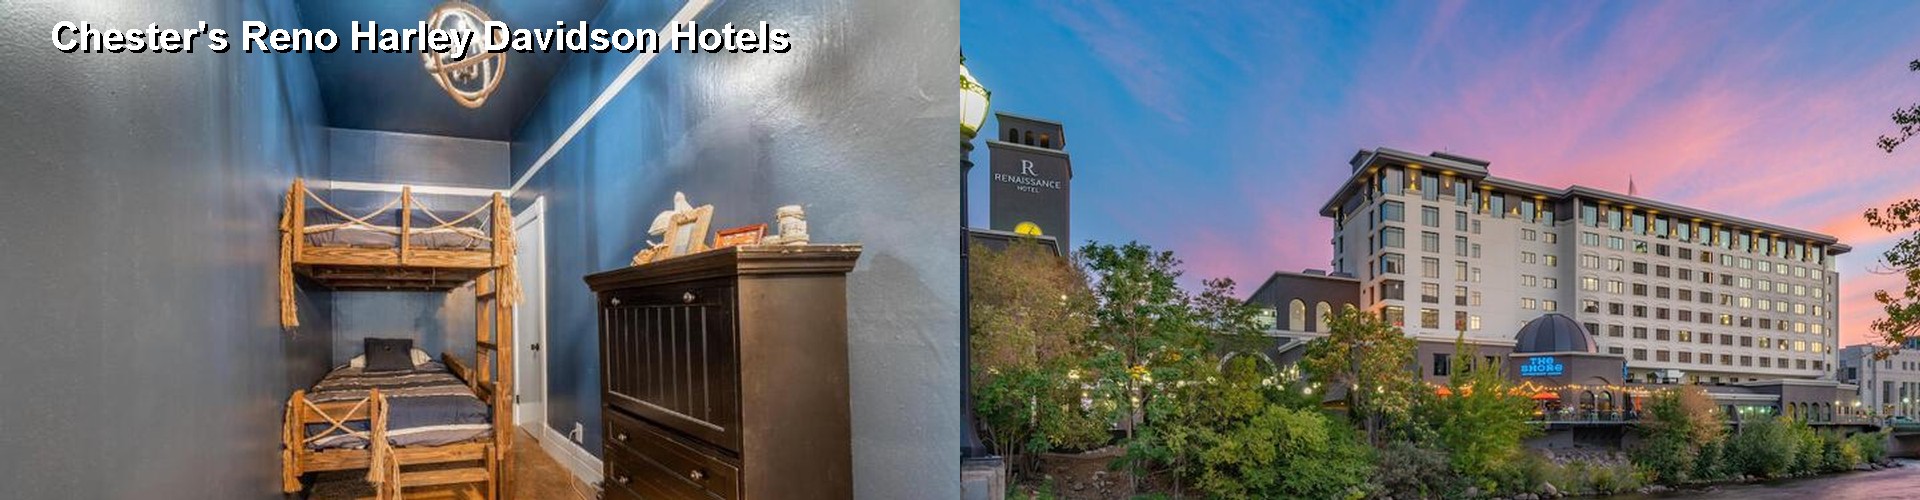 5 Best Hotels near Chester's Reno Harley Davidson